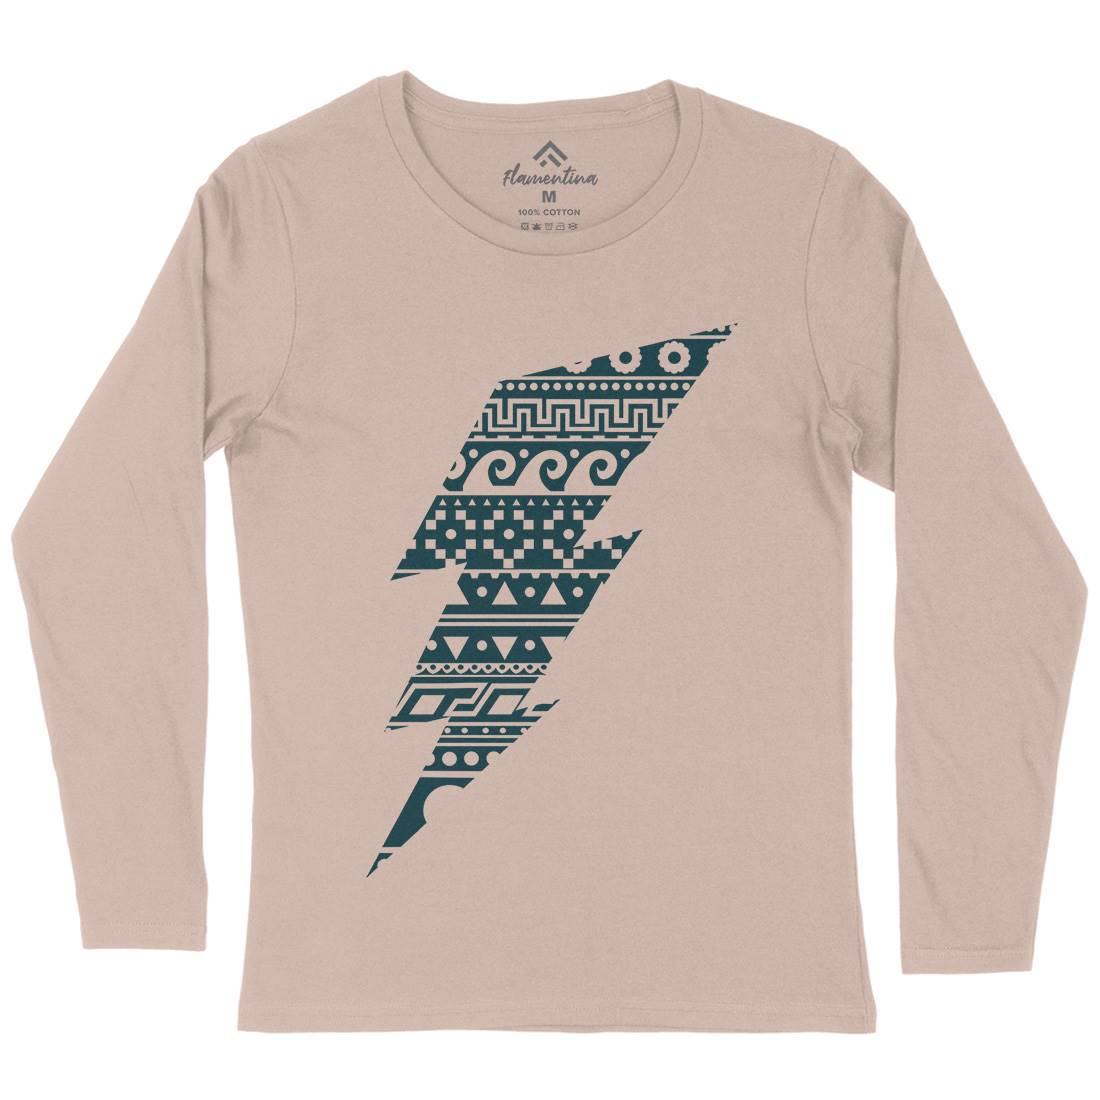 Thunderbolt Womens Long Sleeve T-Shirt Retro B089